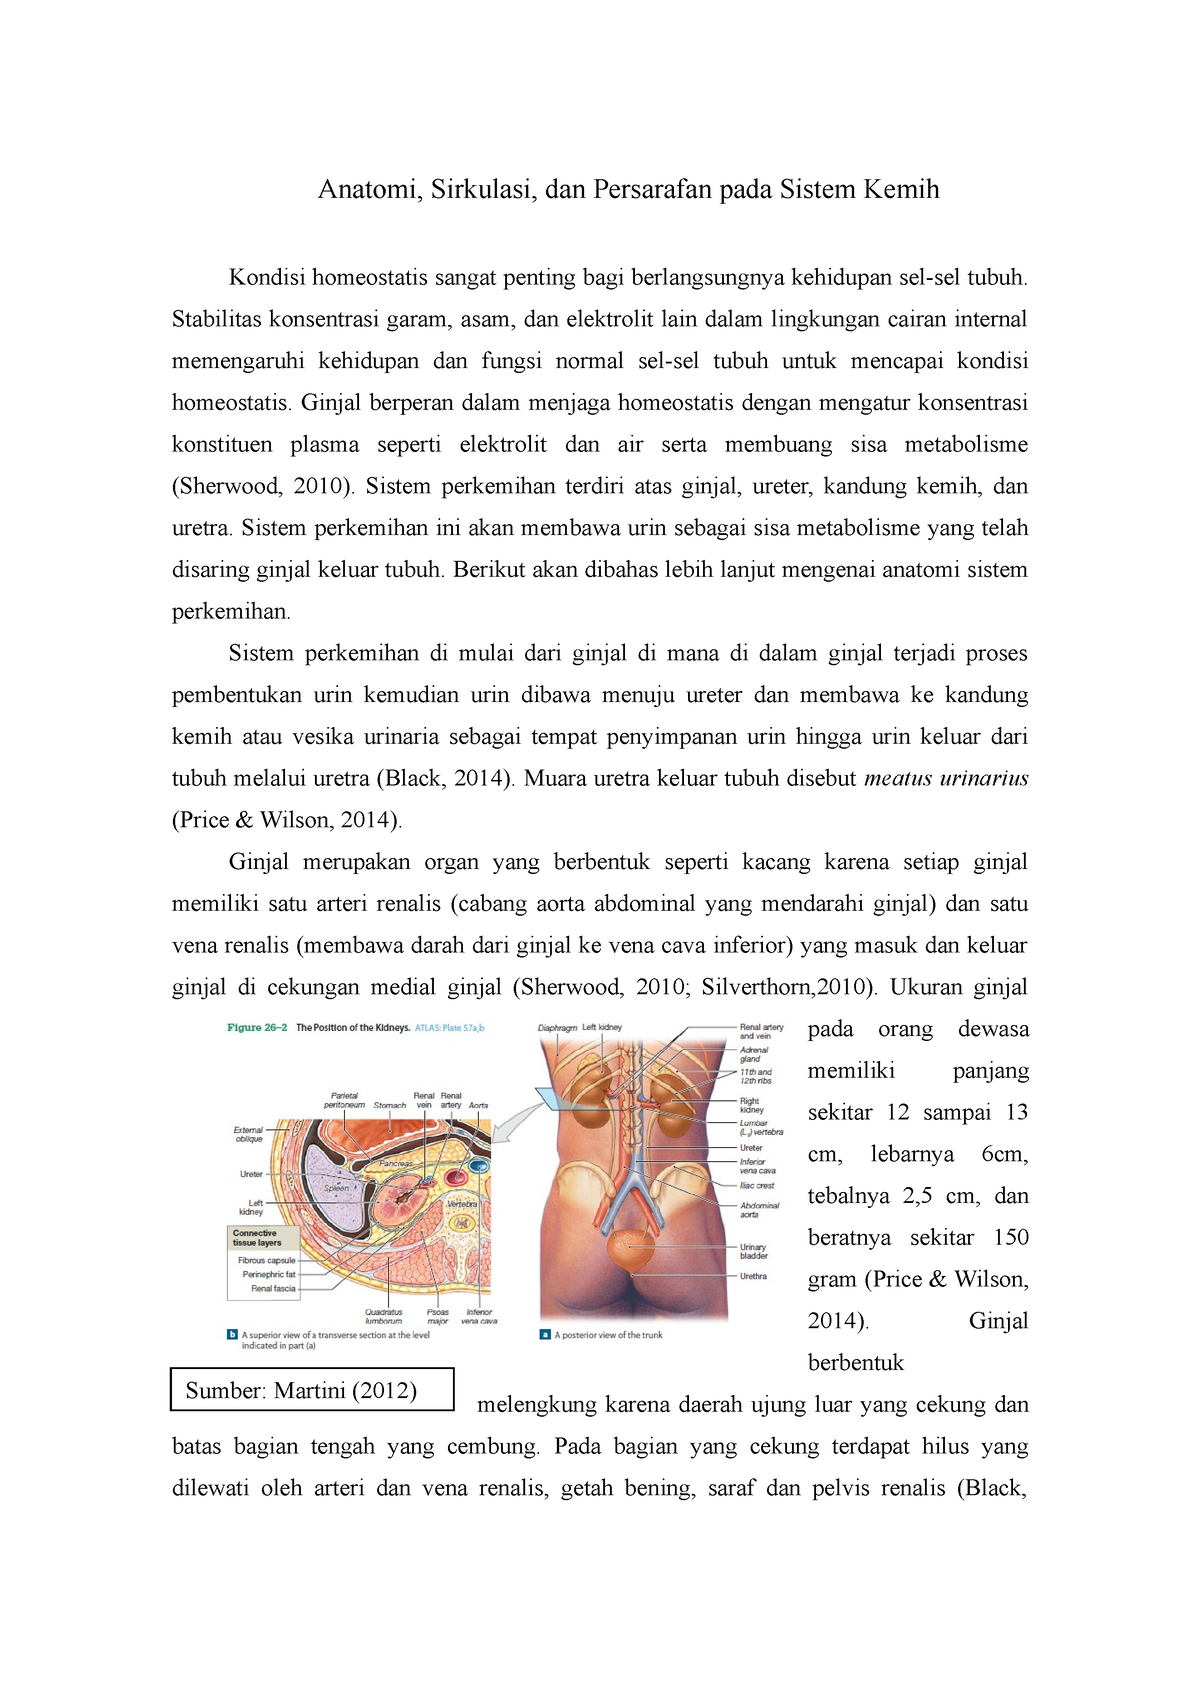 Anatomi Fisiologi Sistem Perkemihan Anatomi Sirkulasi Dan